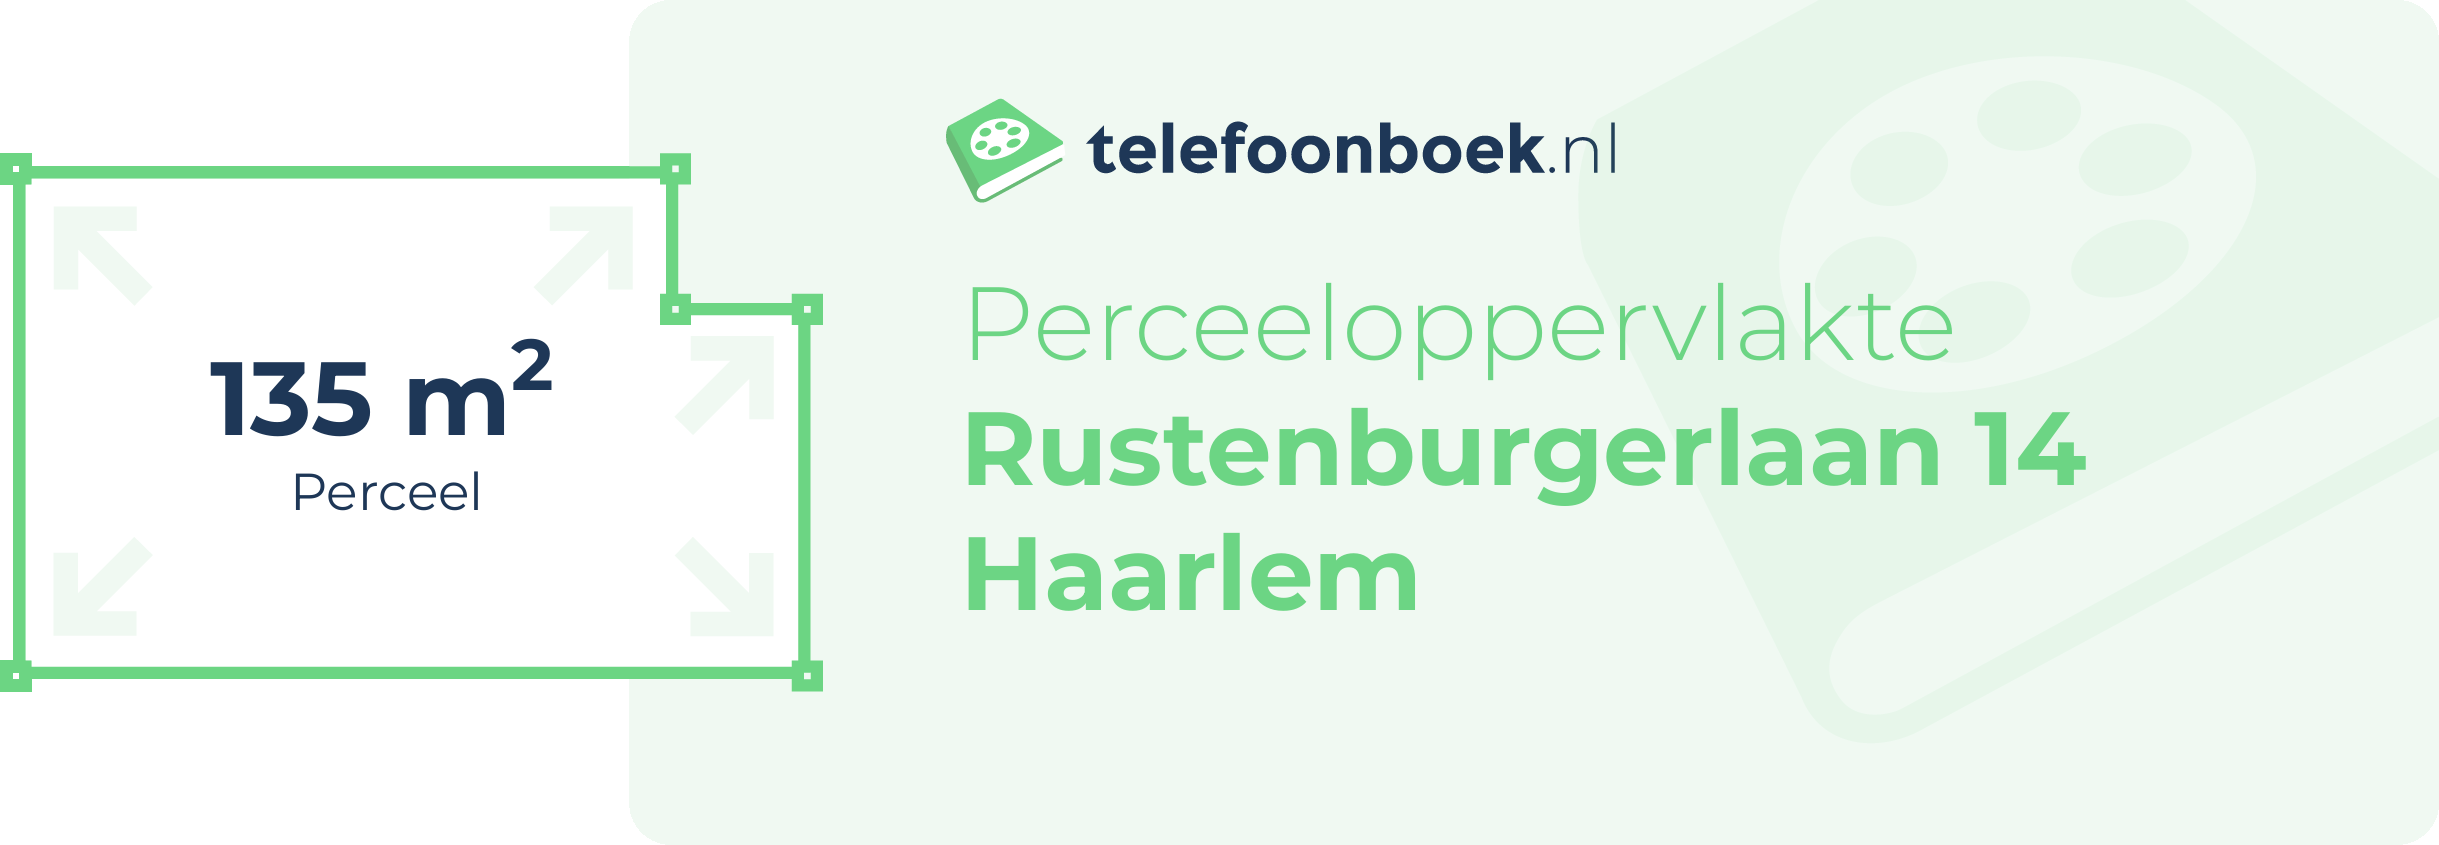 Perceeloppervlakte Rustenburgerlaan 14 Haarlem